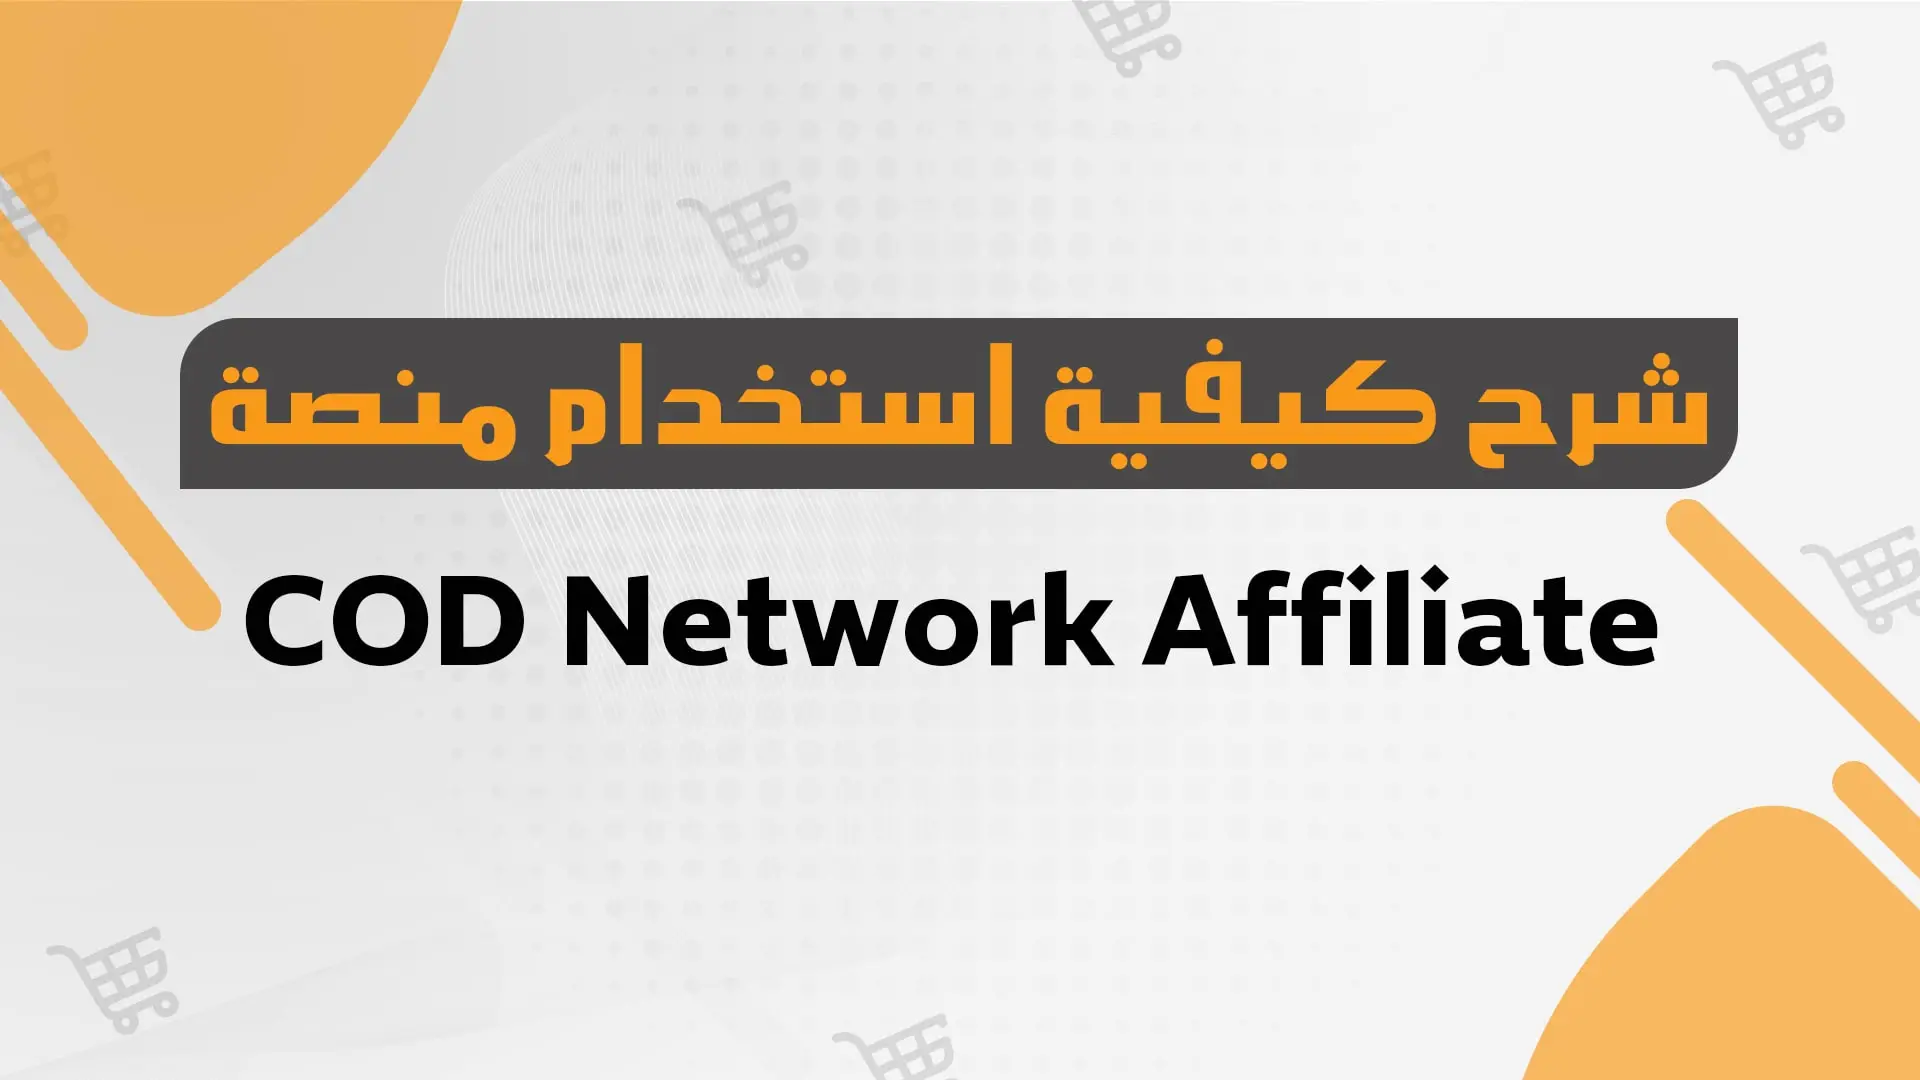 COD Network Affiliate